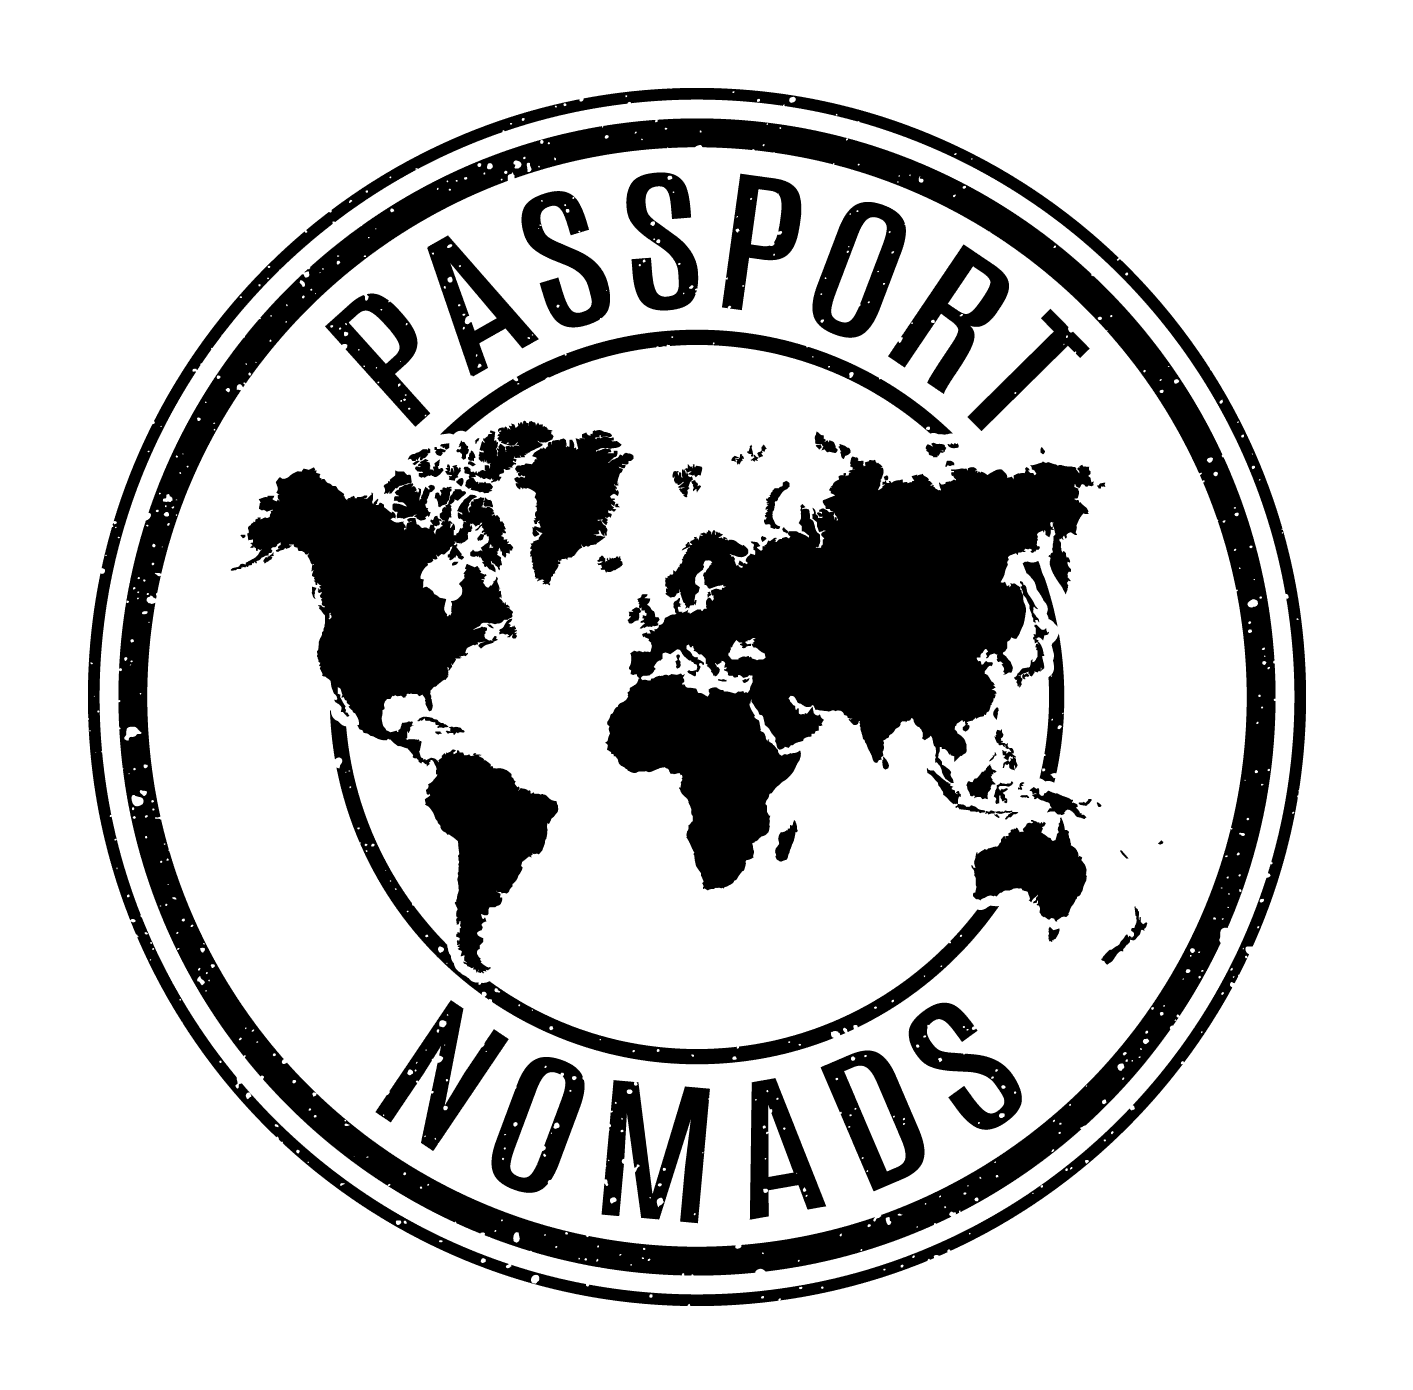 Passport Nomads